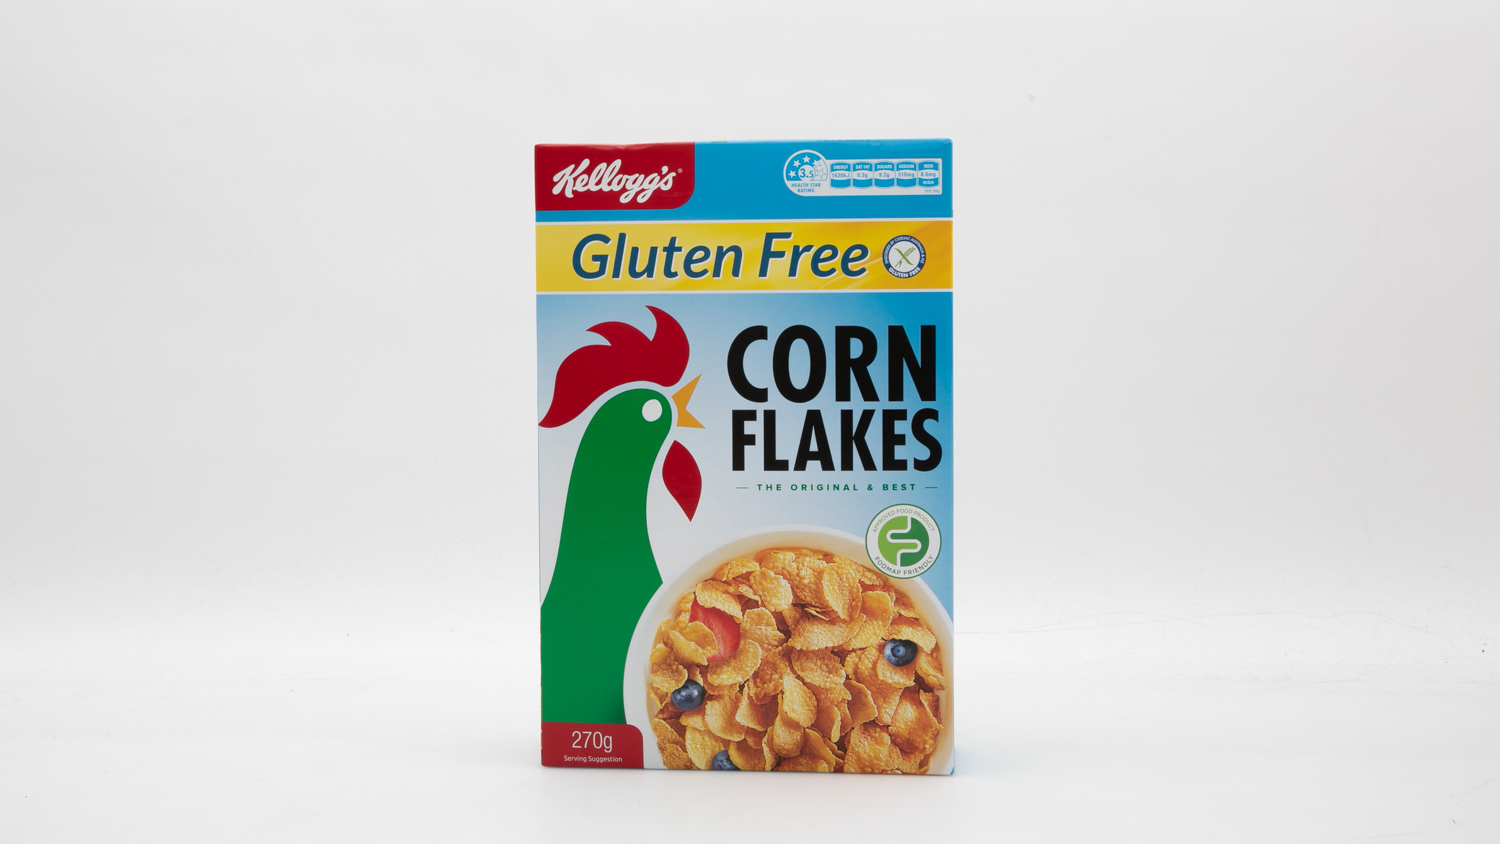 Kellogg's Gluten Free Corn Flakes carousel image